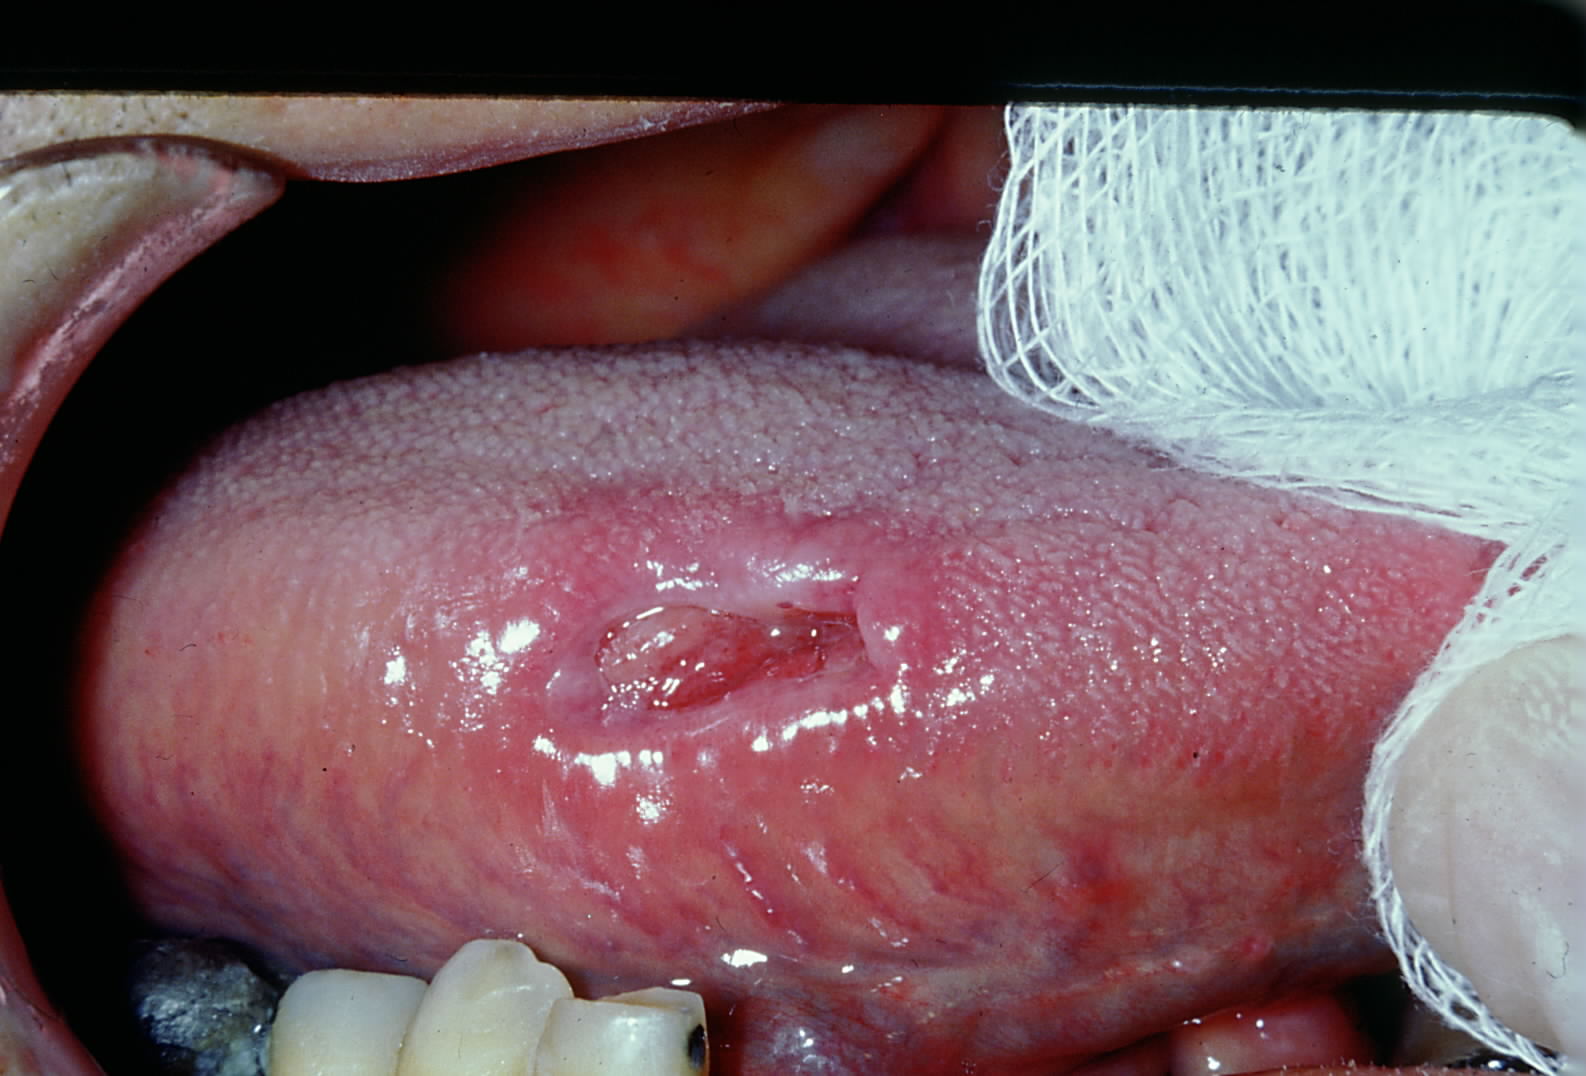 Traumatic ulcerative granuloma with stromal eosinophilia located on the tongue.